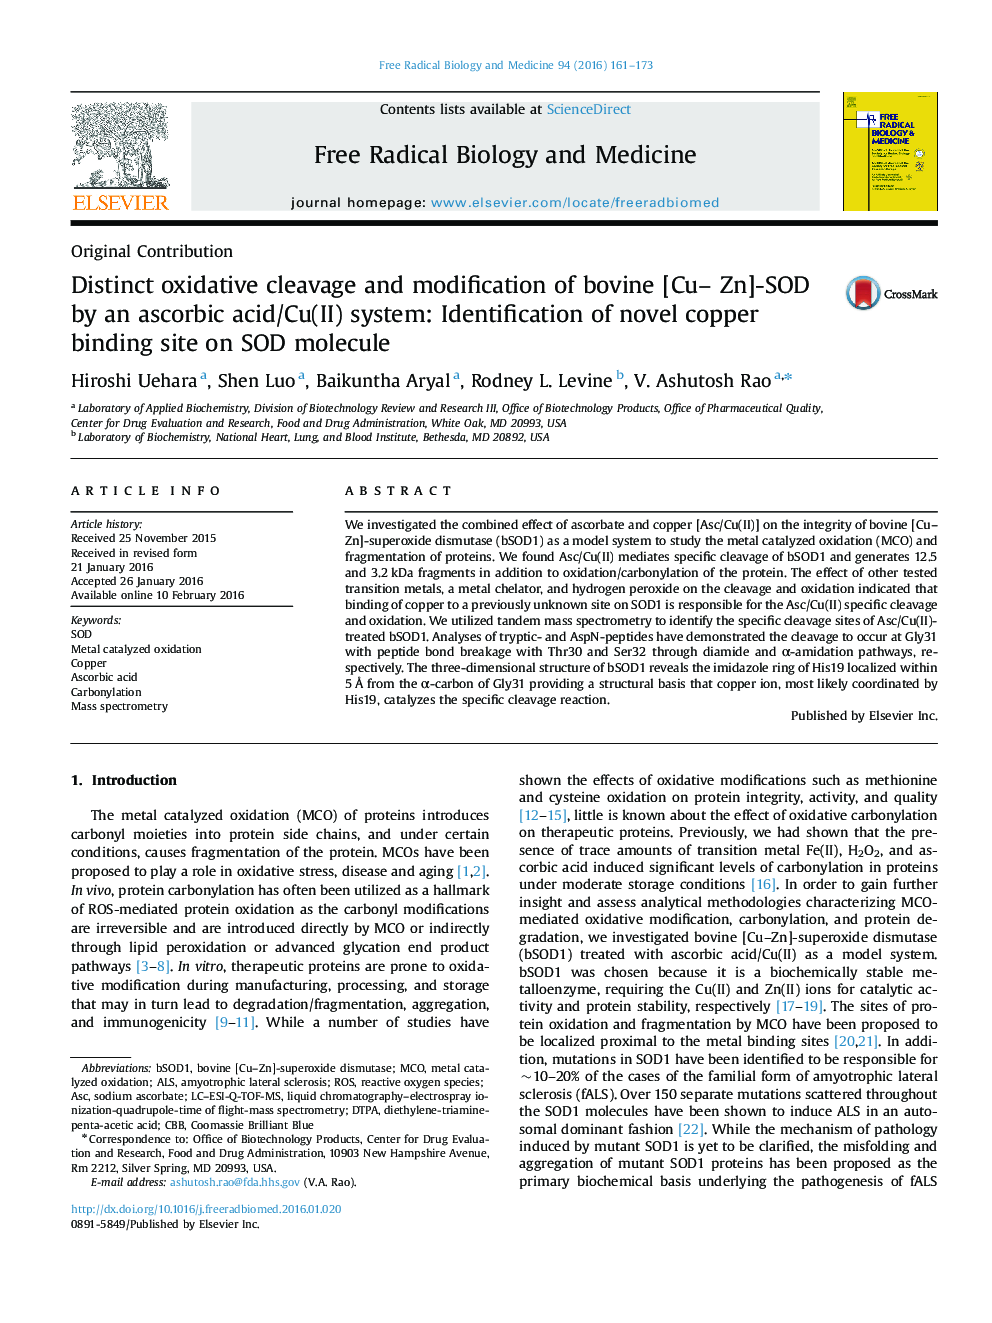 Distinct oxidative cleavage and modification of bovine [Cu- Zn]-SOD by an ascorbic acid/Cu(II) system: Identification of novel copper binding site on SOD molecule